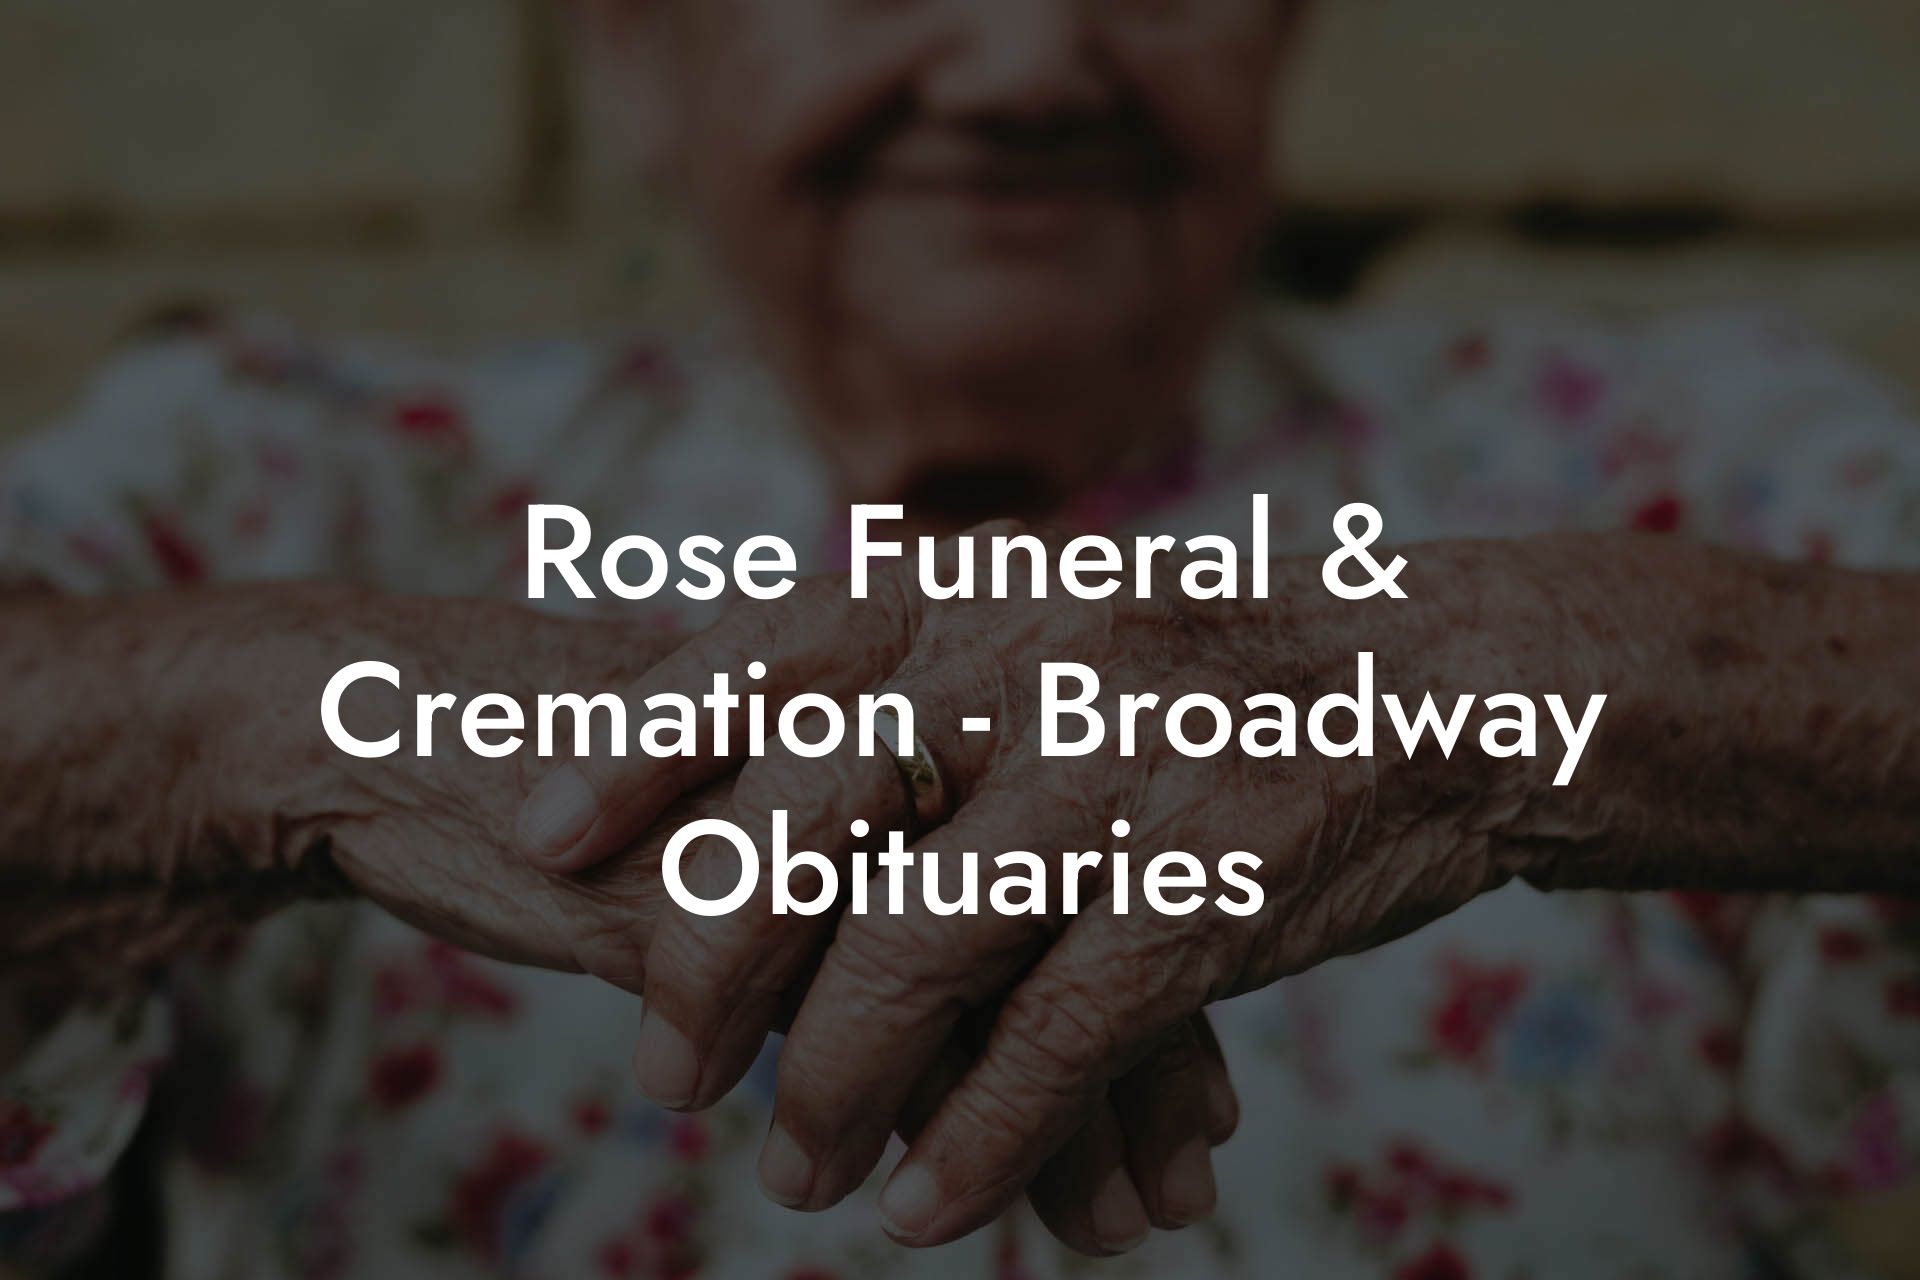 Rose Funeral & Cremation - Broadway Obituaries